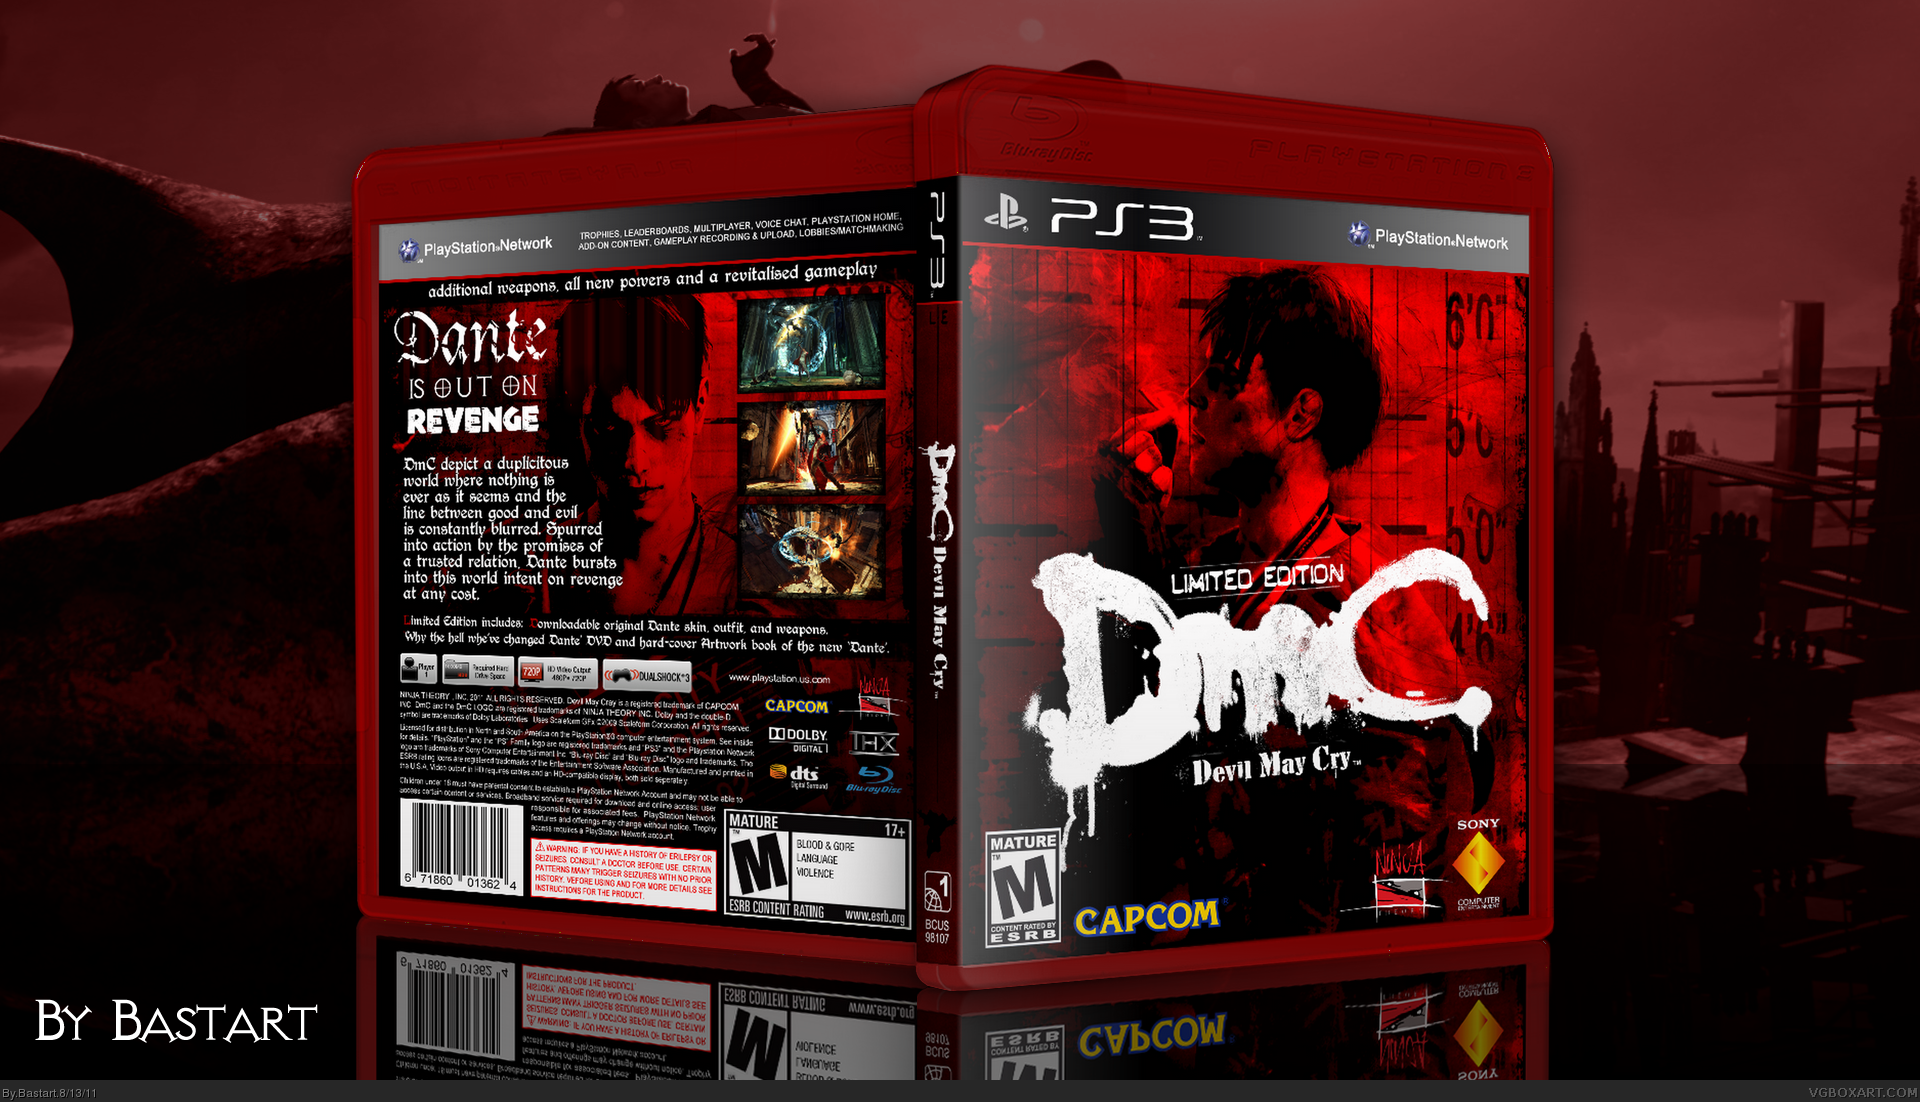 DmC: Limited Edition box cover